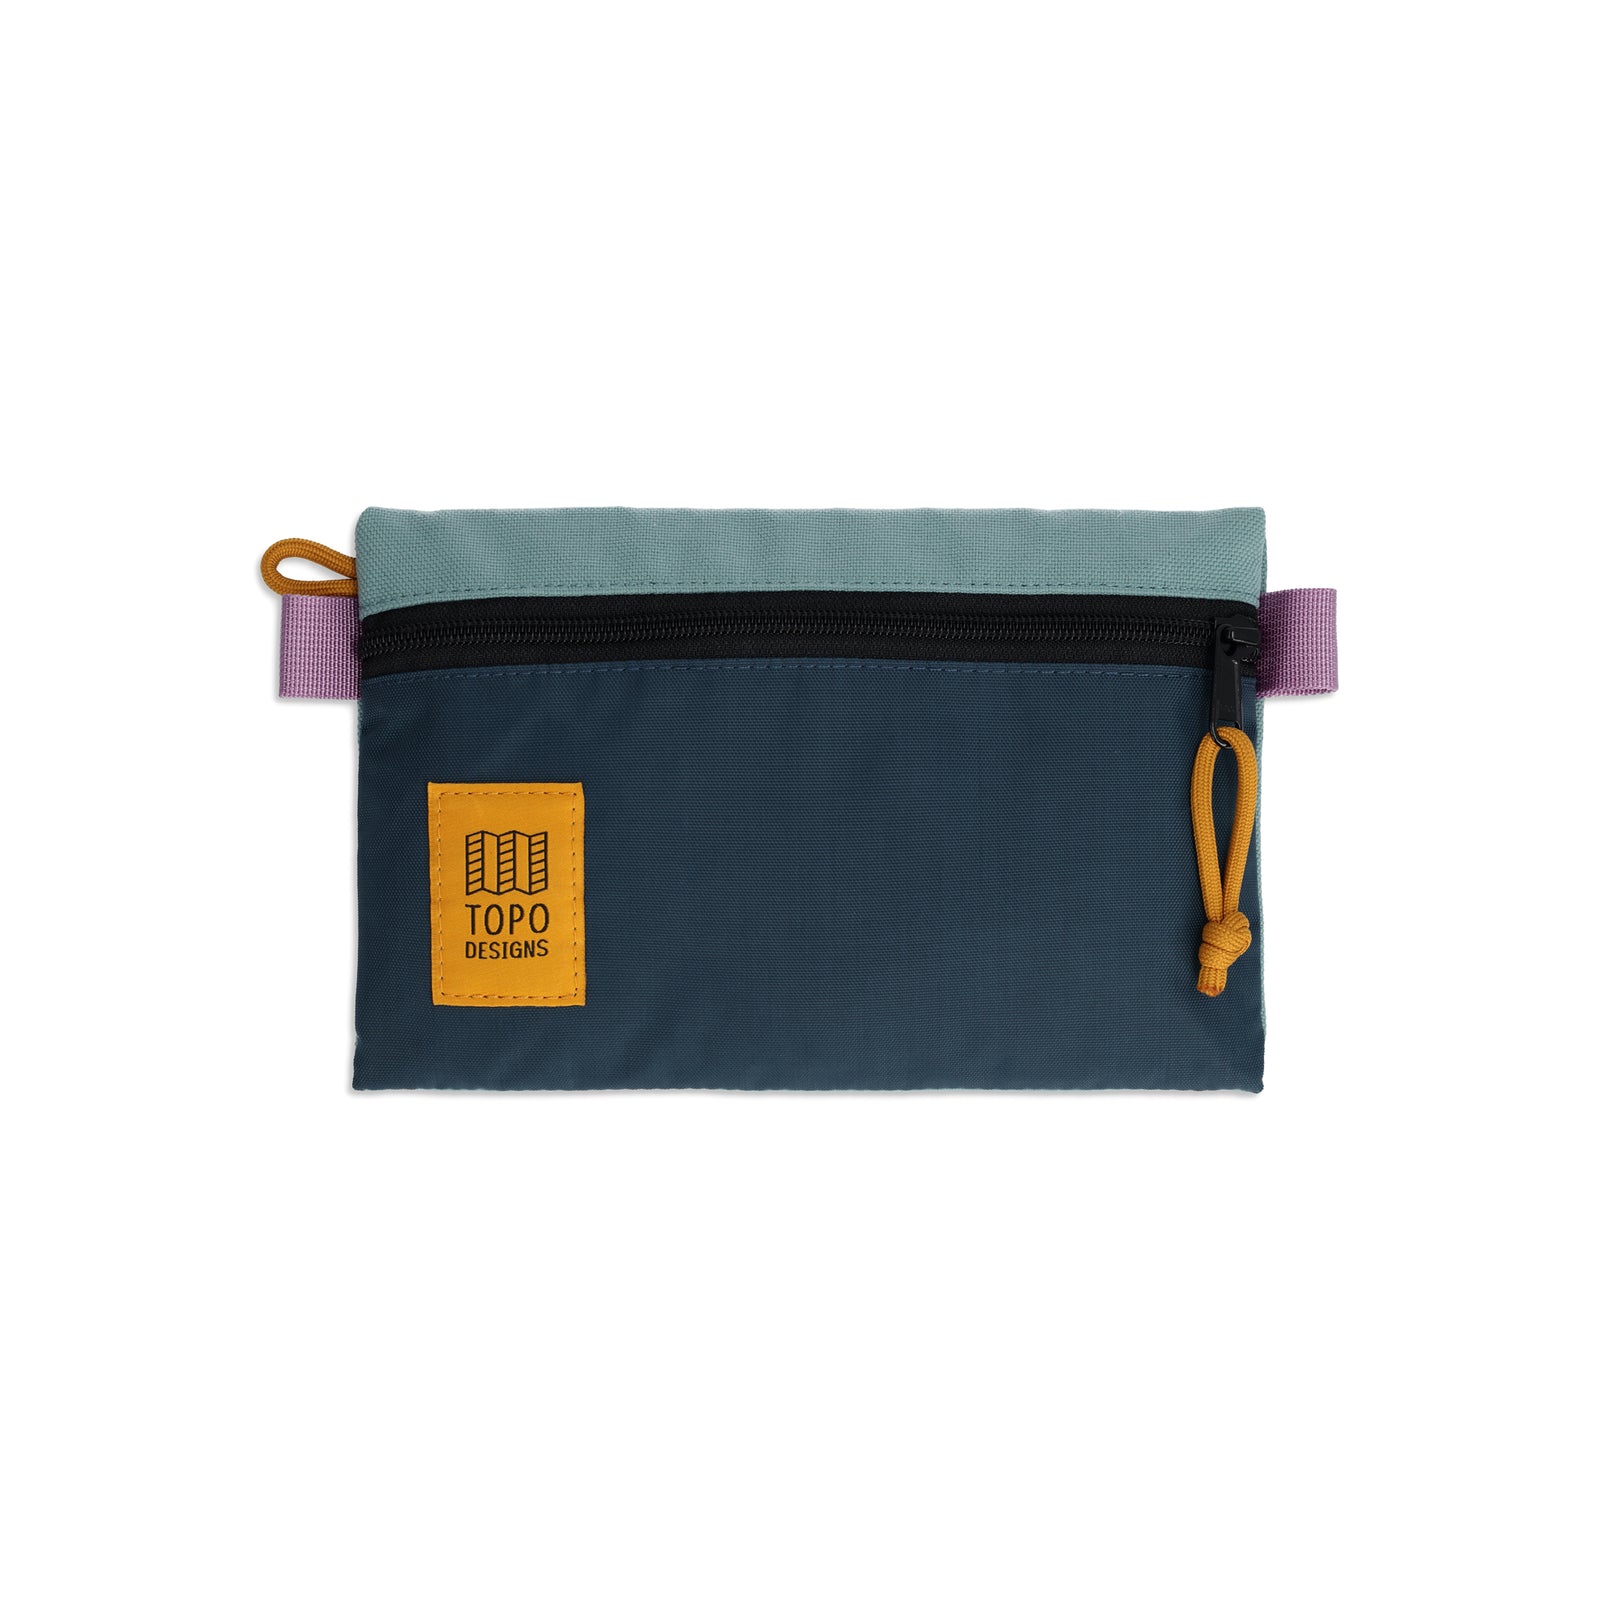 Topo Designs Accessory Bag "Small" in "Sage / Pond Blue""